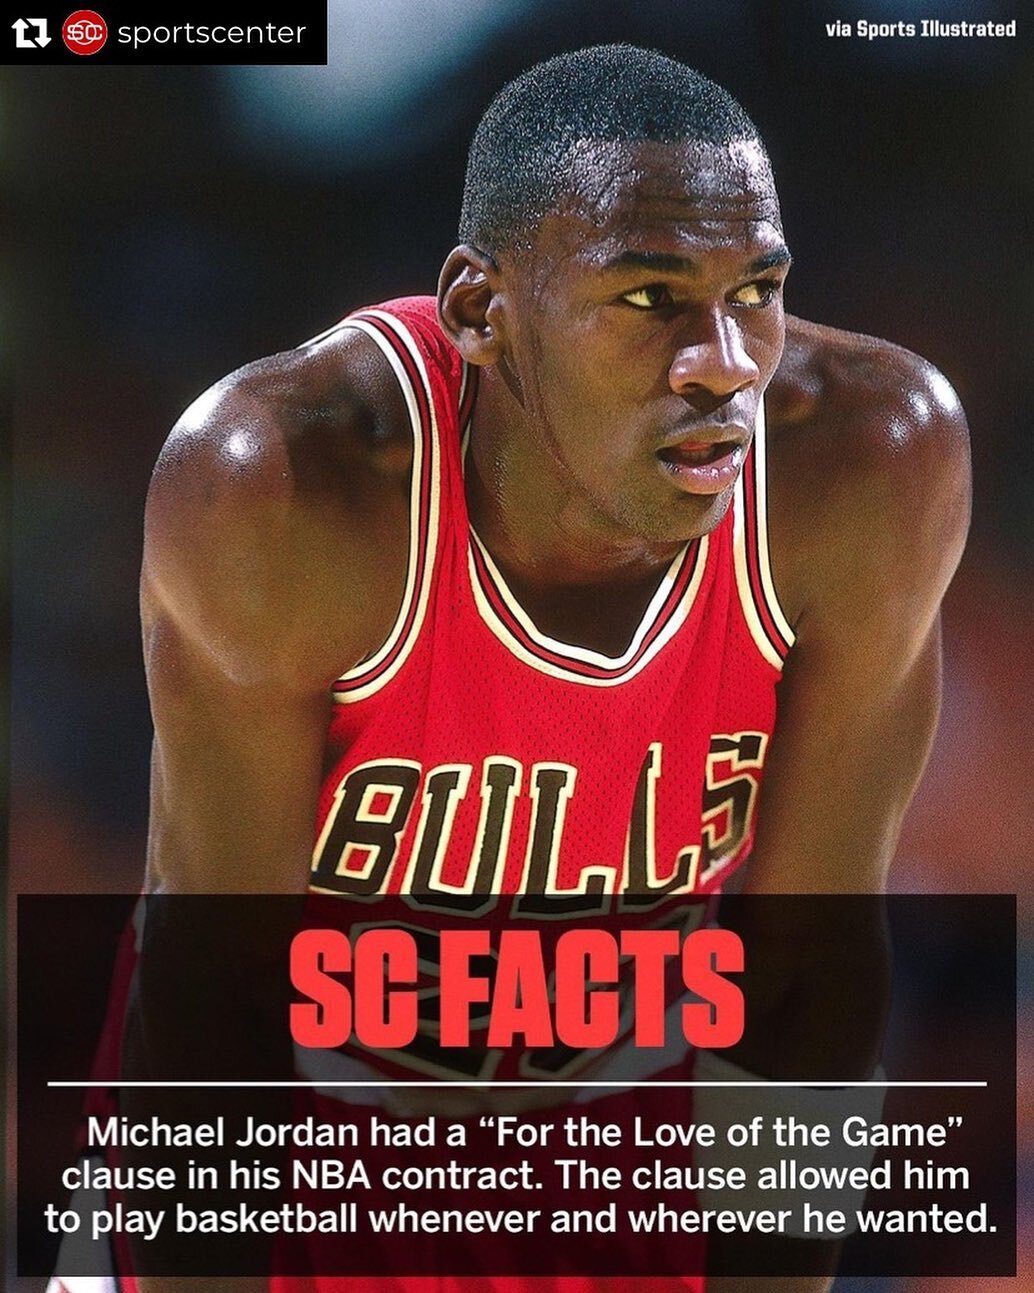 That&rsquo;s HoopLove. 🏀🧡

#hooplove #thatshooplove #itslove #basketball #loveforthegame🏀 #mj #michaeljordan #truehooper 

Repost from @sportscenter
&bull;
Michael Jordan was a true hooper 🏀👏 (h/t rtnba/TW)